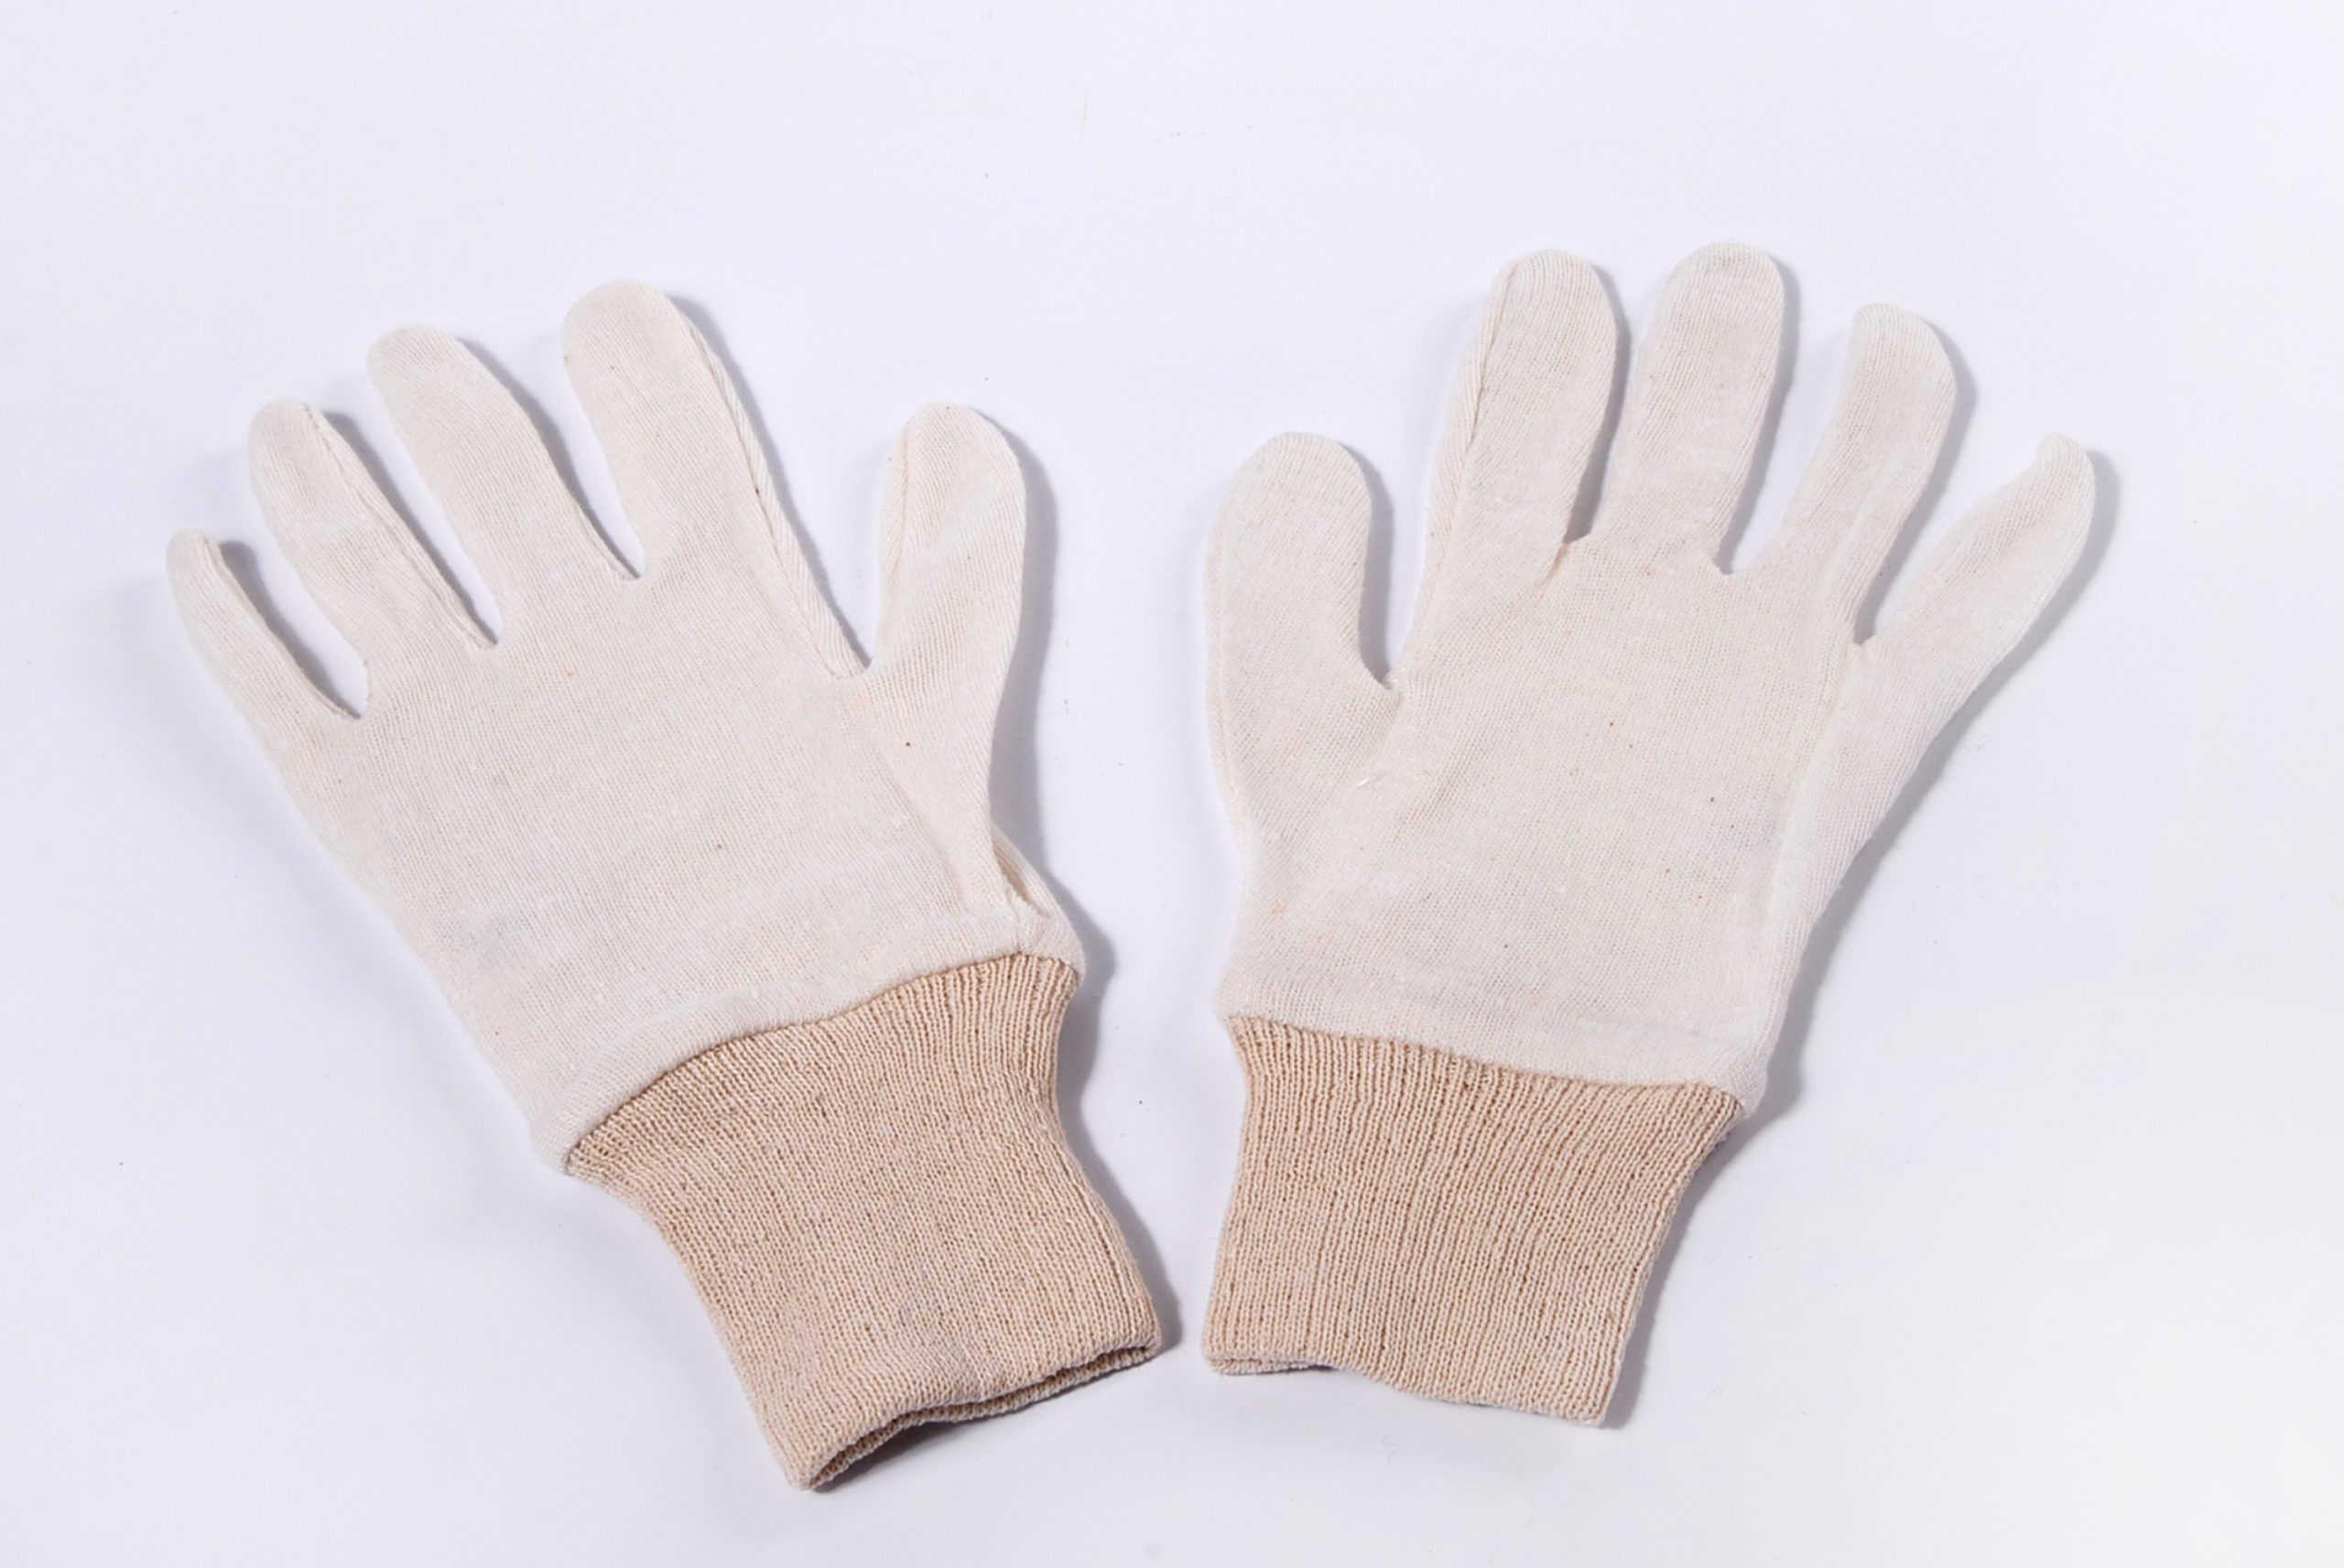 MERARD polishing gloves